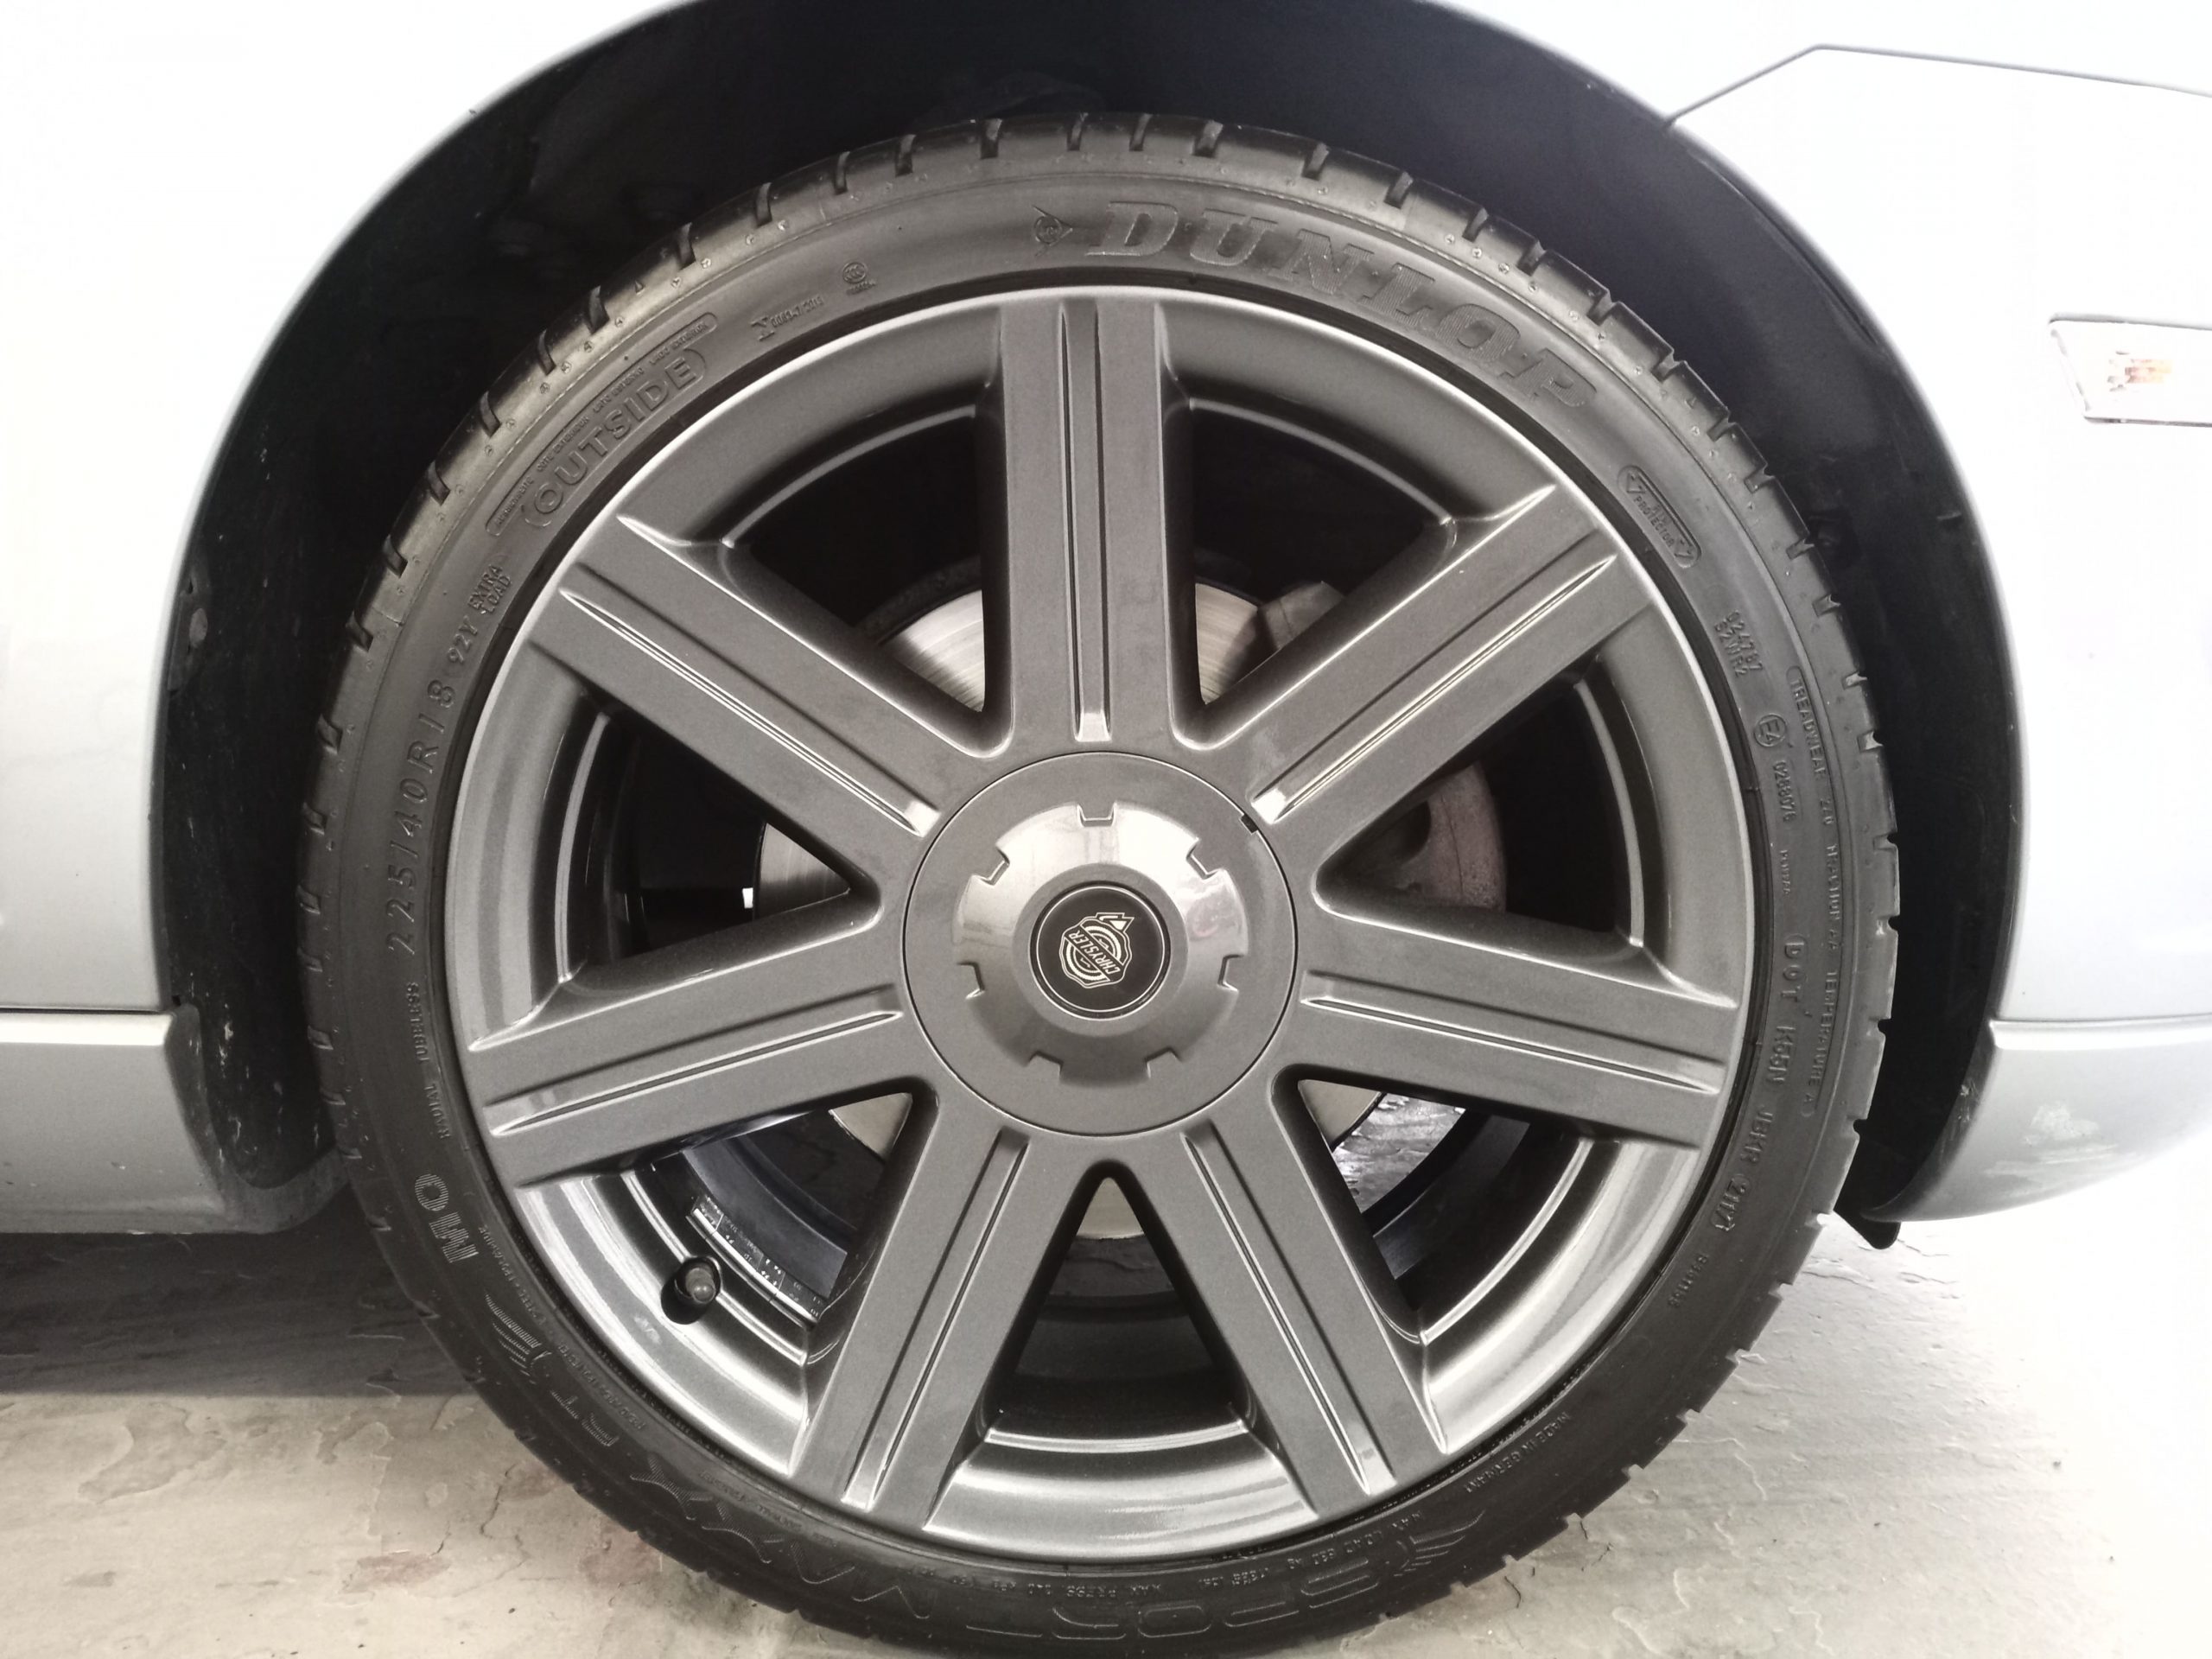 Chrysler alloy wheel colou change wakefield-min